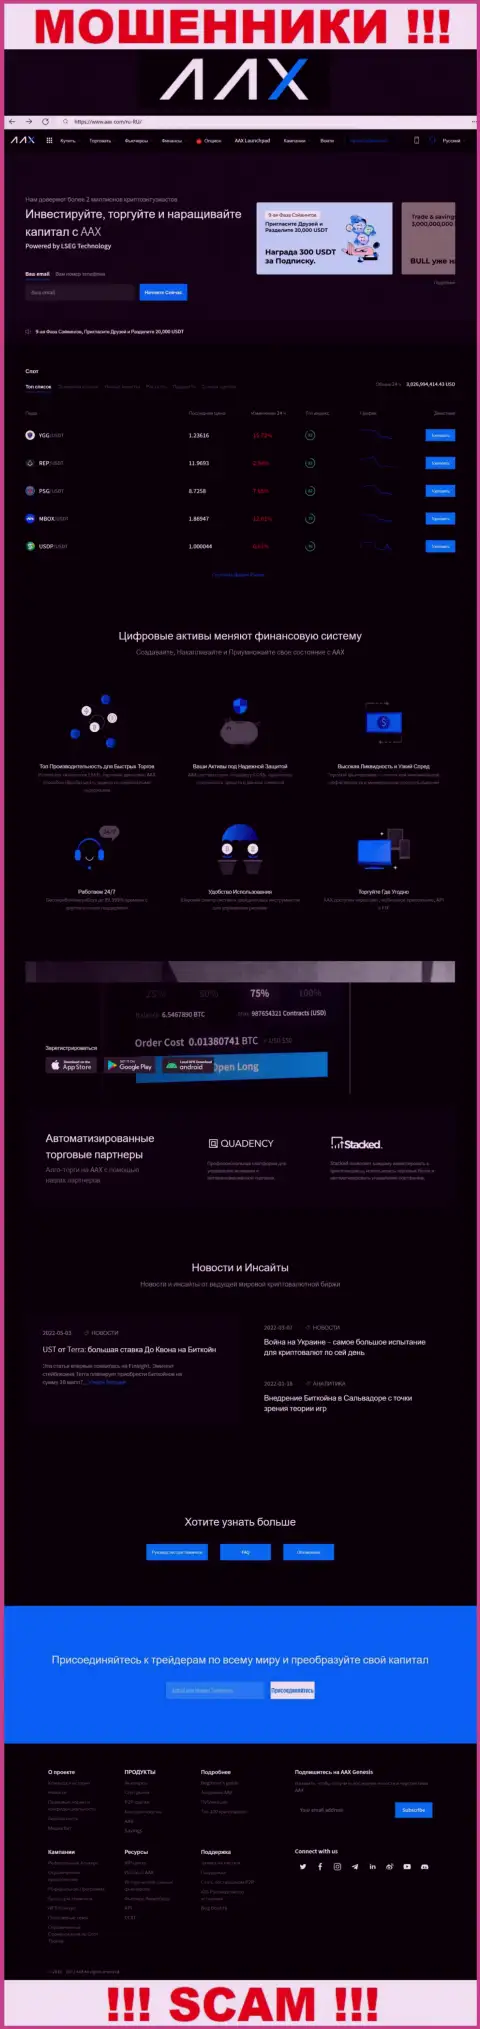 Официальный онлайн-сервис мошенников AAX Лимитед